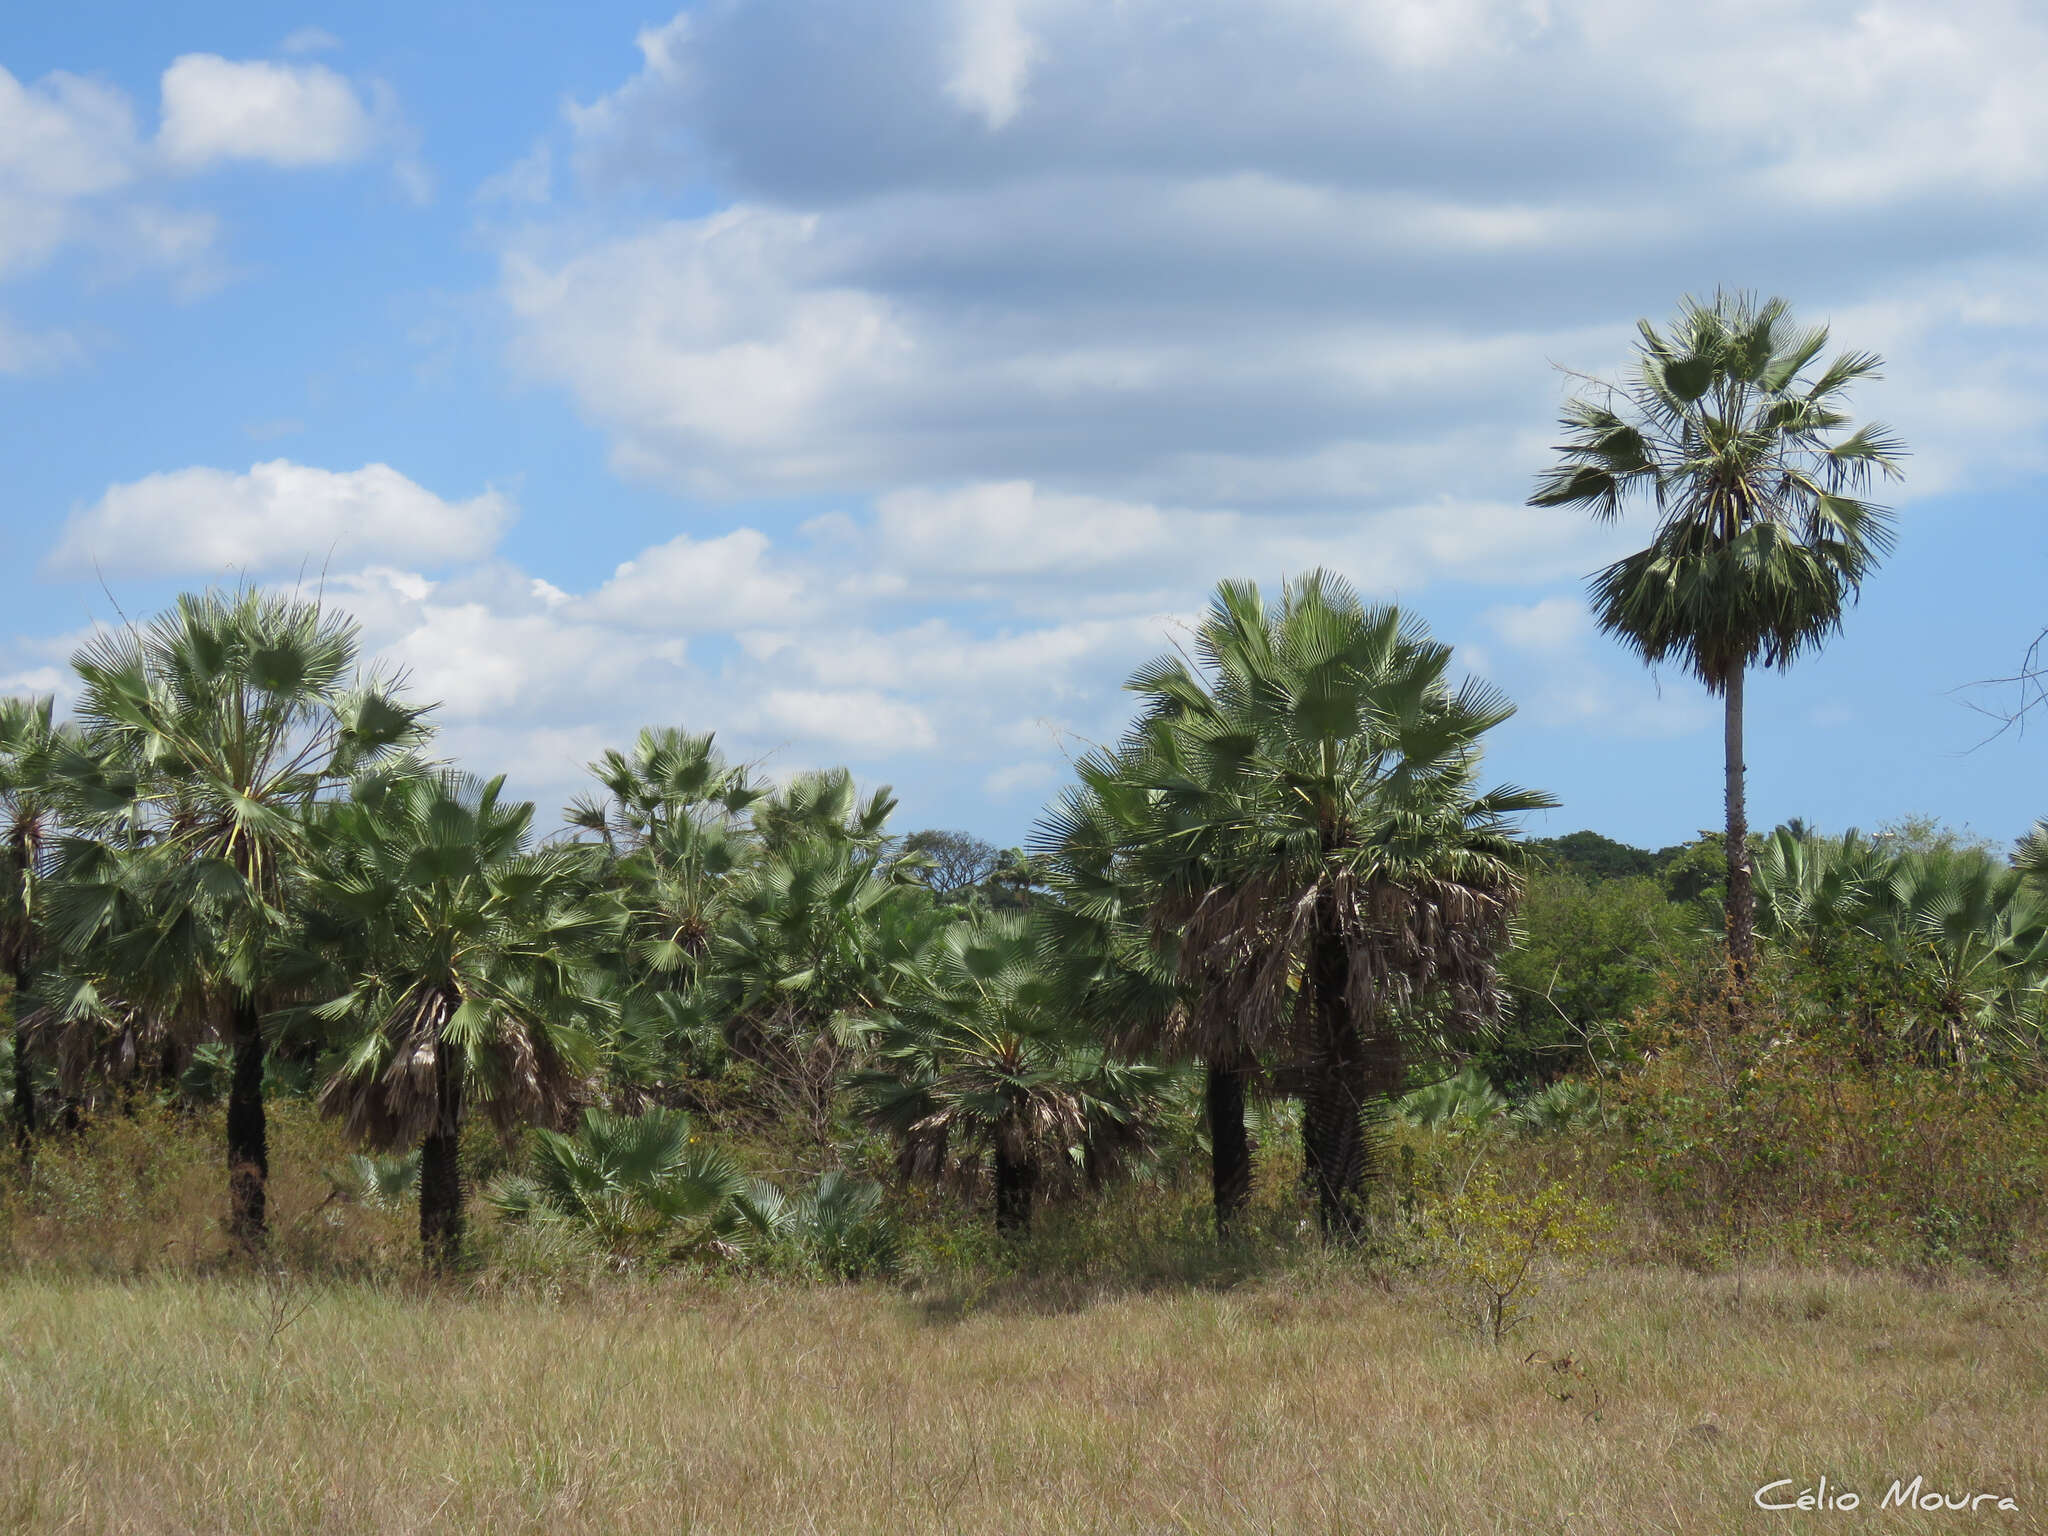 Image of Carnauba palm